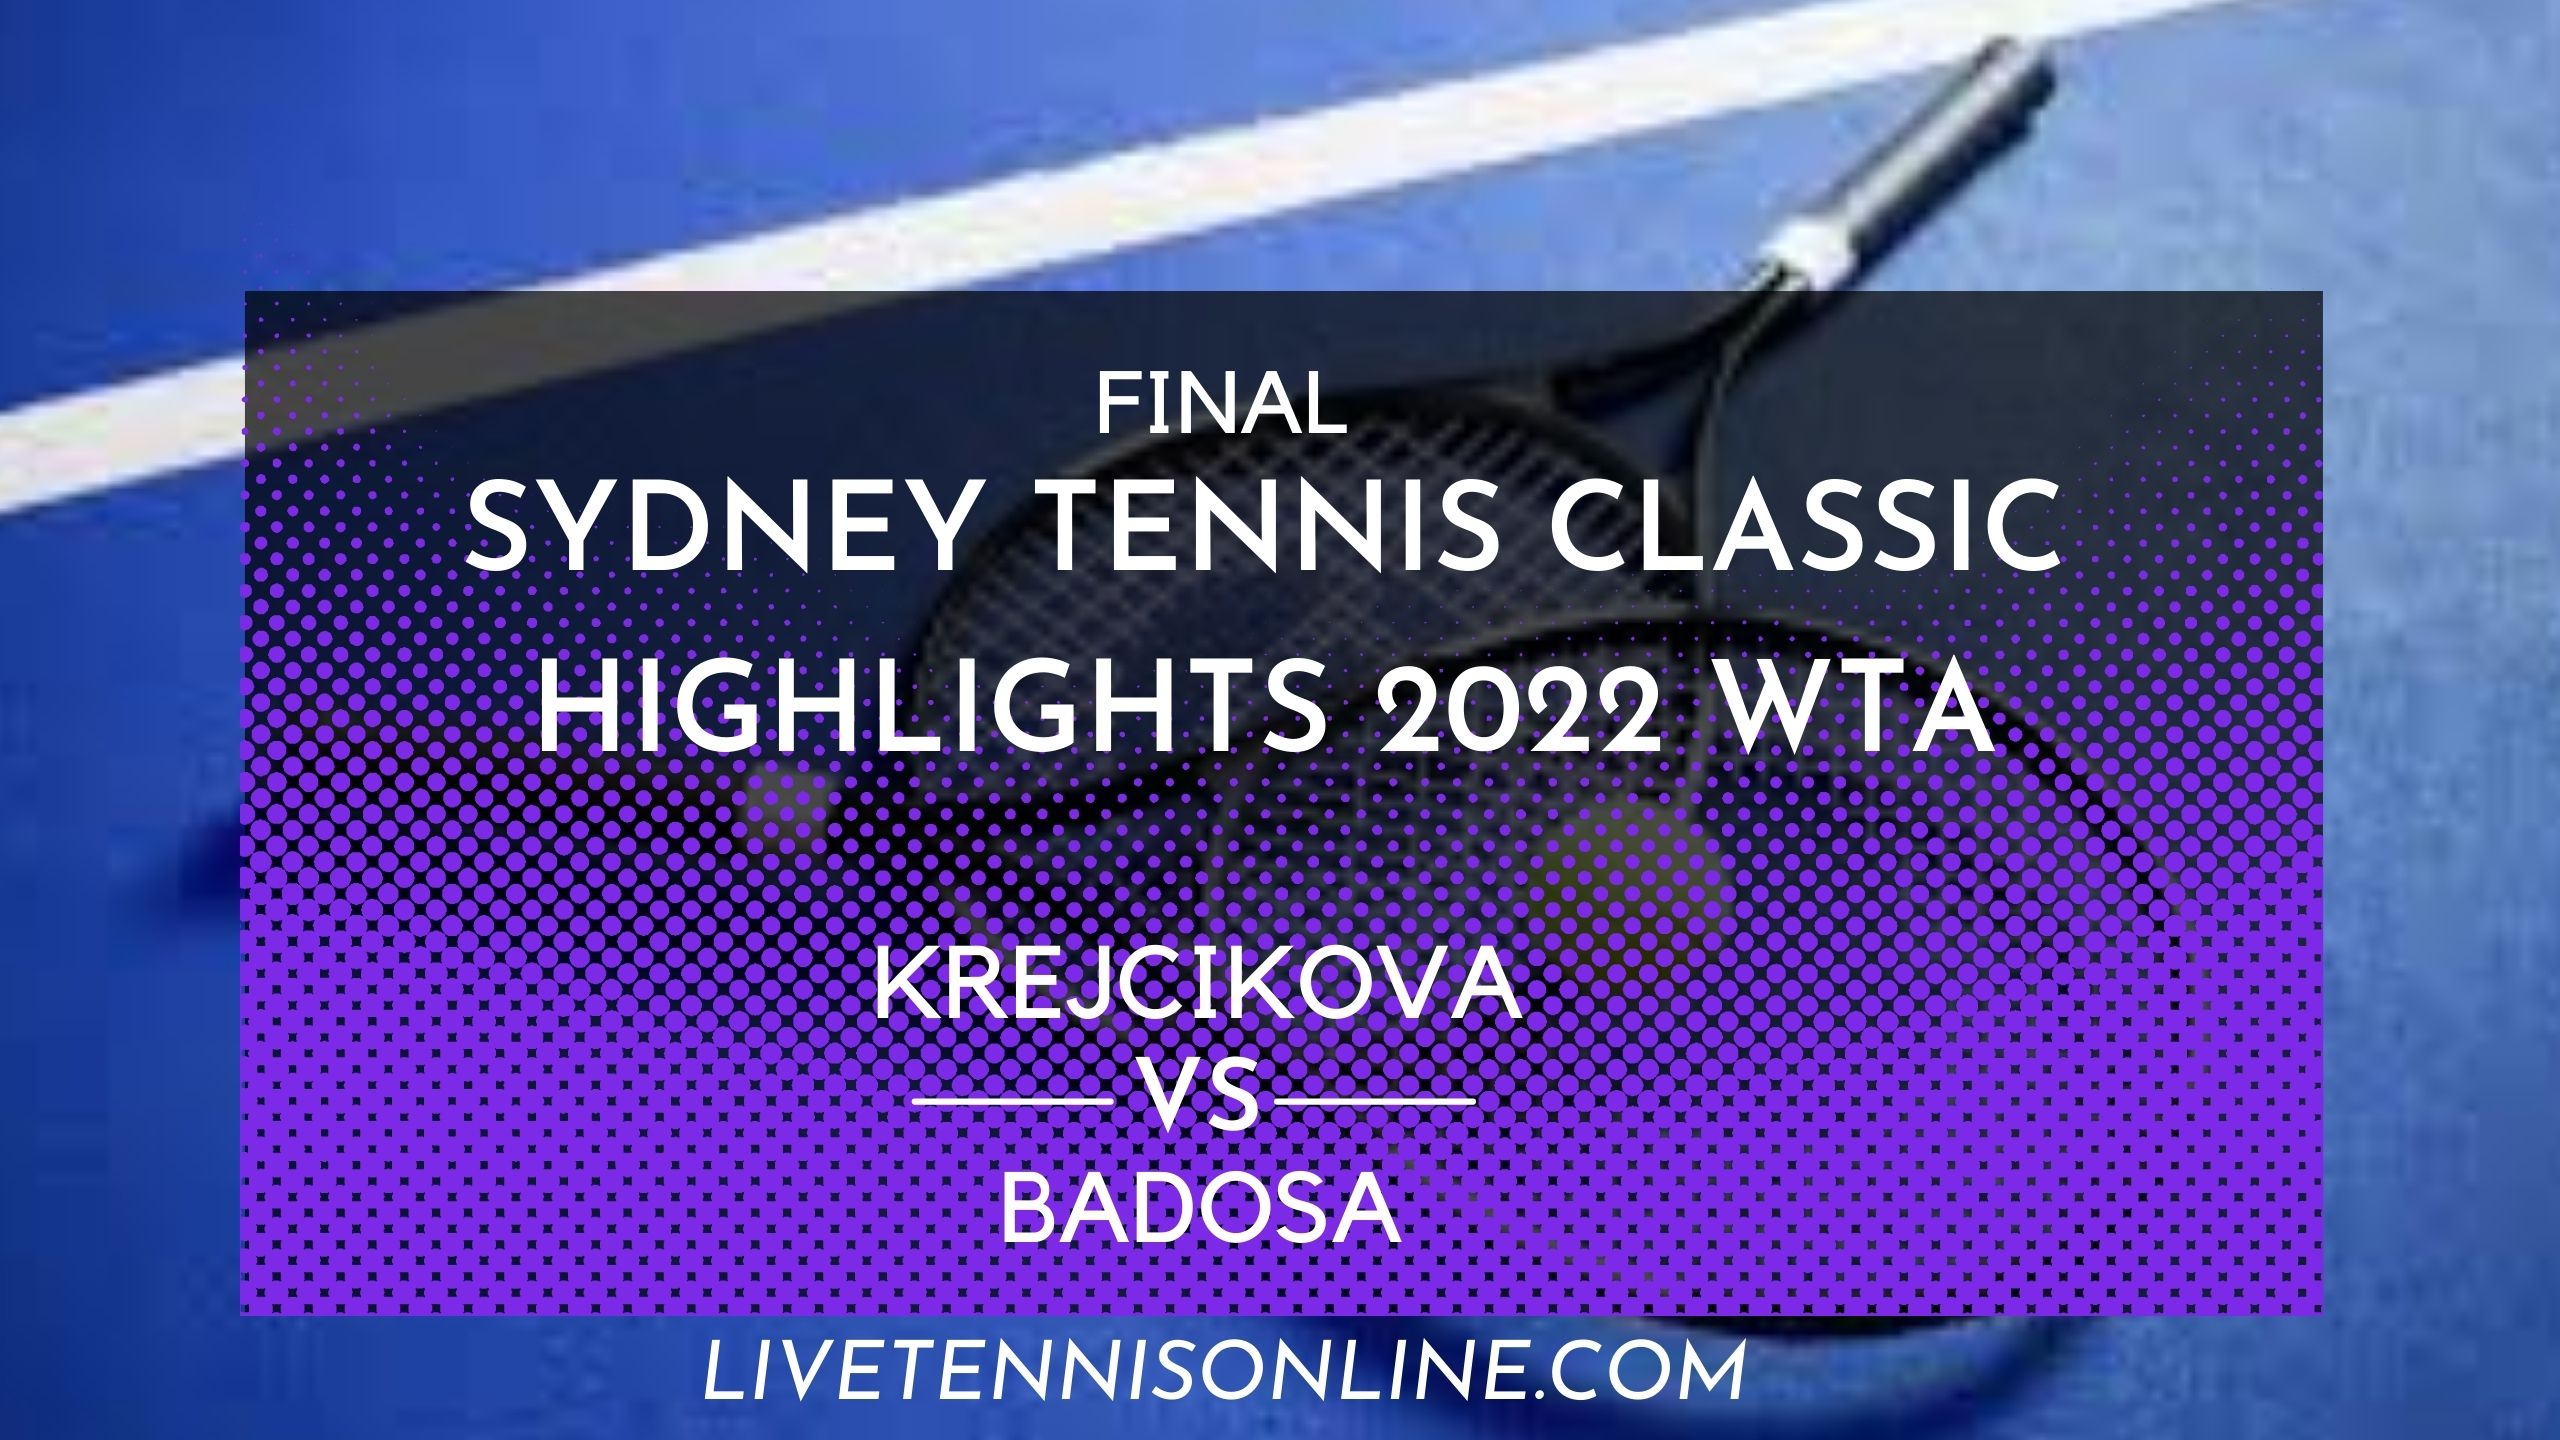 Krejcikova Vs Badosa Final Highlights 2022 Sydney Tennis